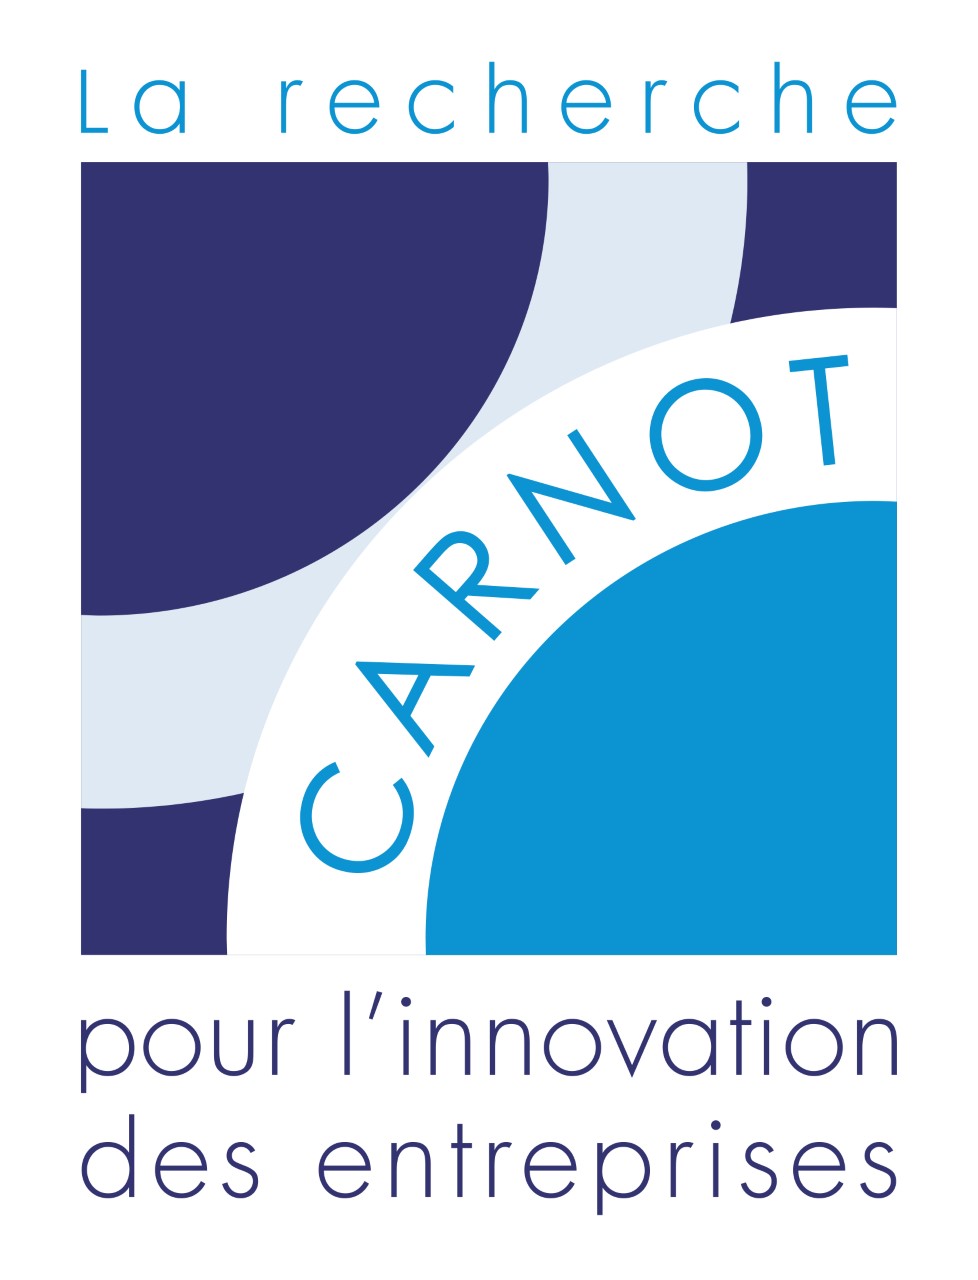 Logo Instituts Carnot